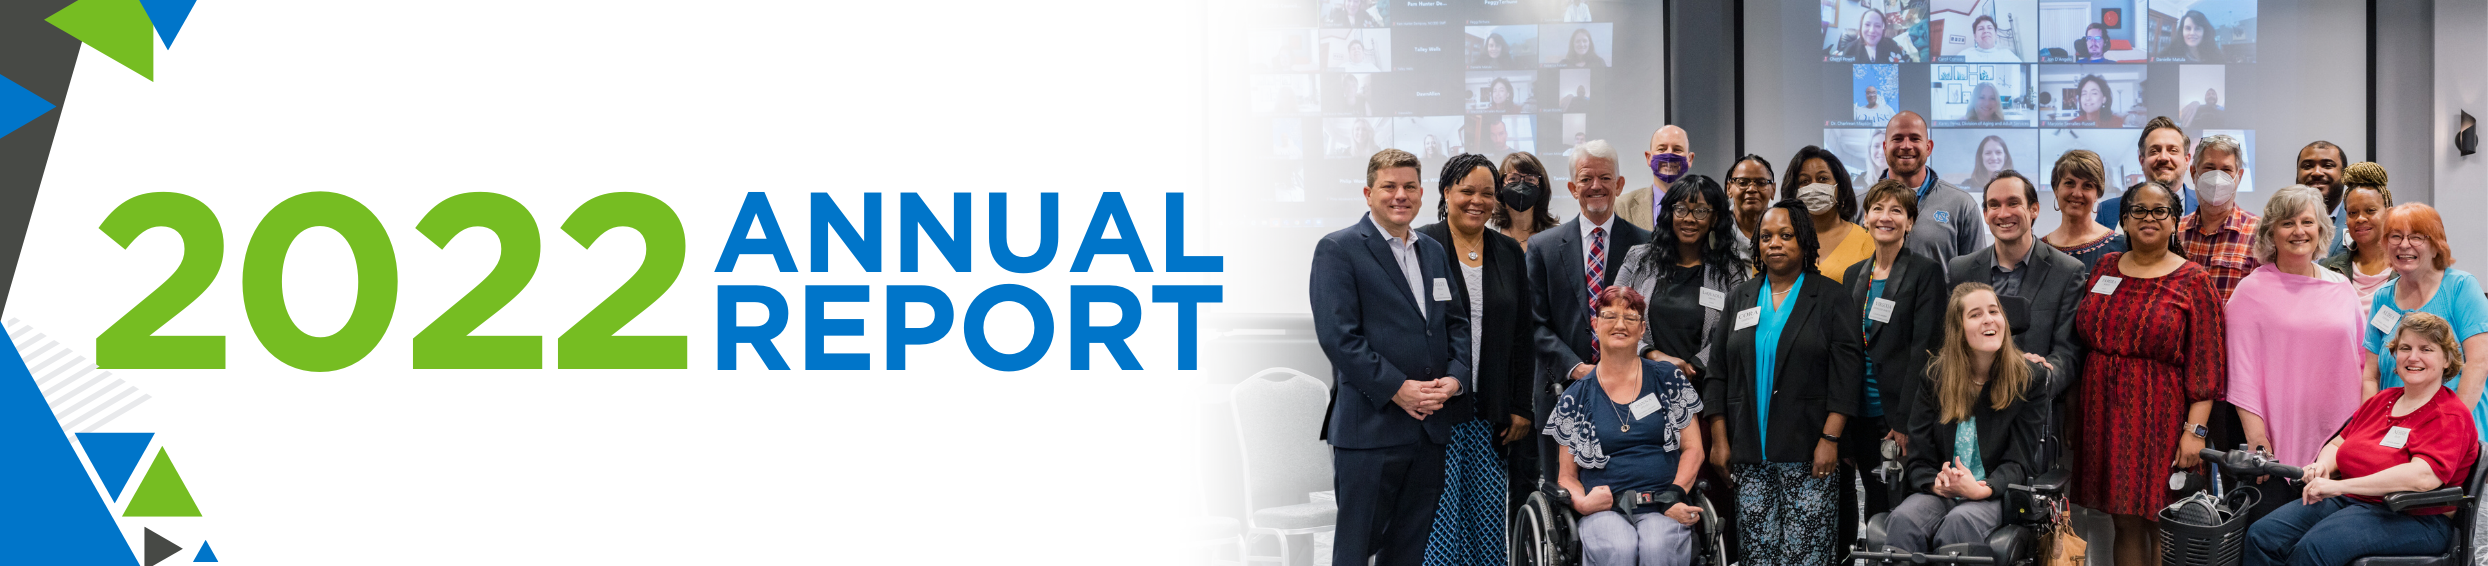 2022 Annual Report Header